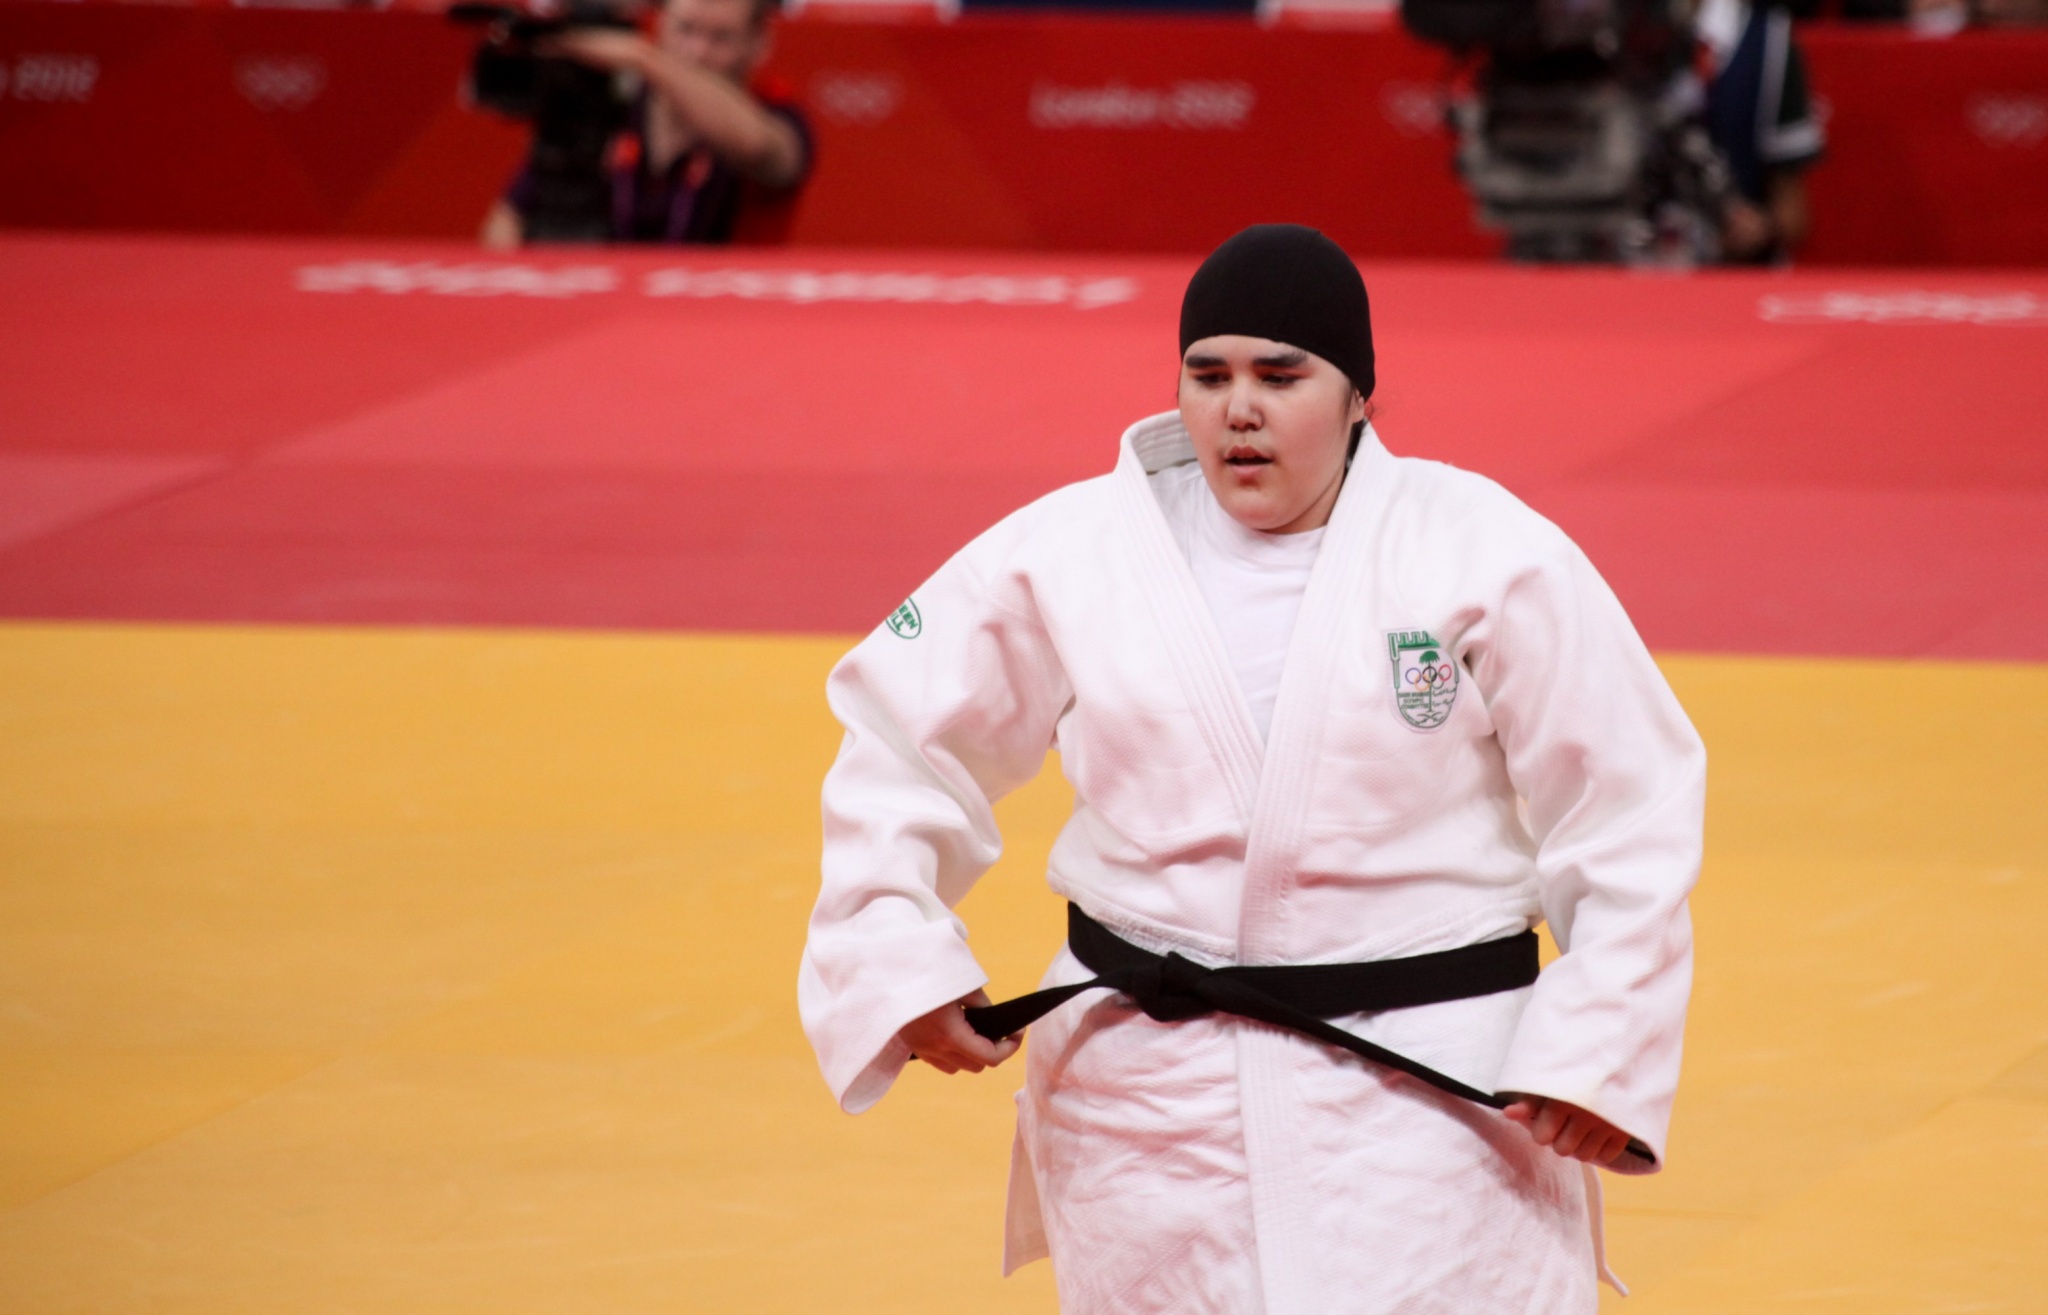 La judokate saoudienne  Wodjan Shaherkani aux Jeux Olympiques en 2012  - Crédit photo : Martin Hesketh - Wikimedia Commons 